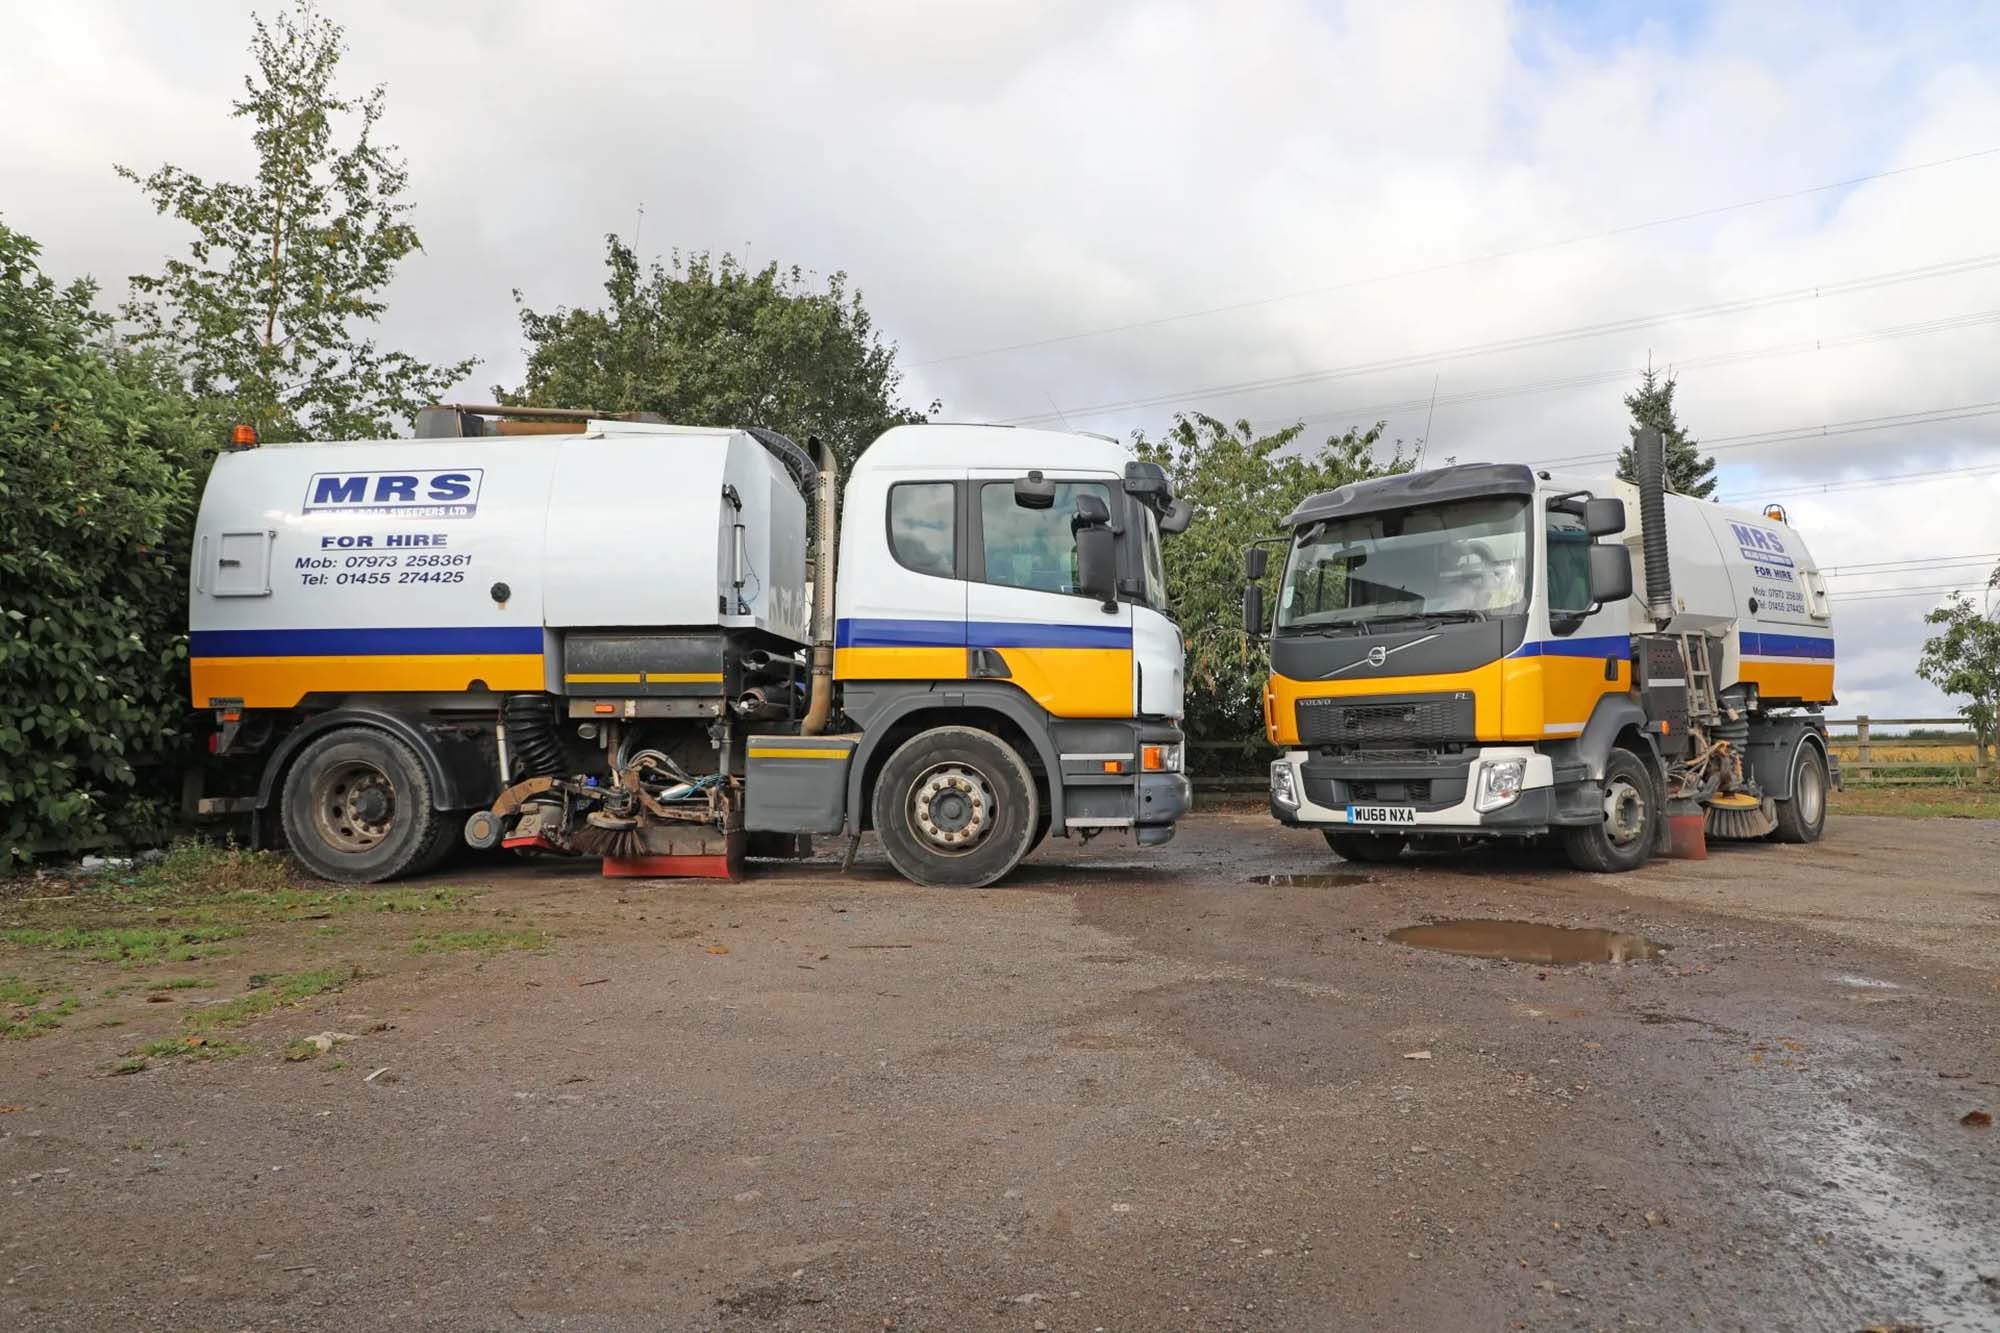 Midland Road Sweepers Ltd fleet of vehicles